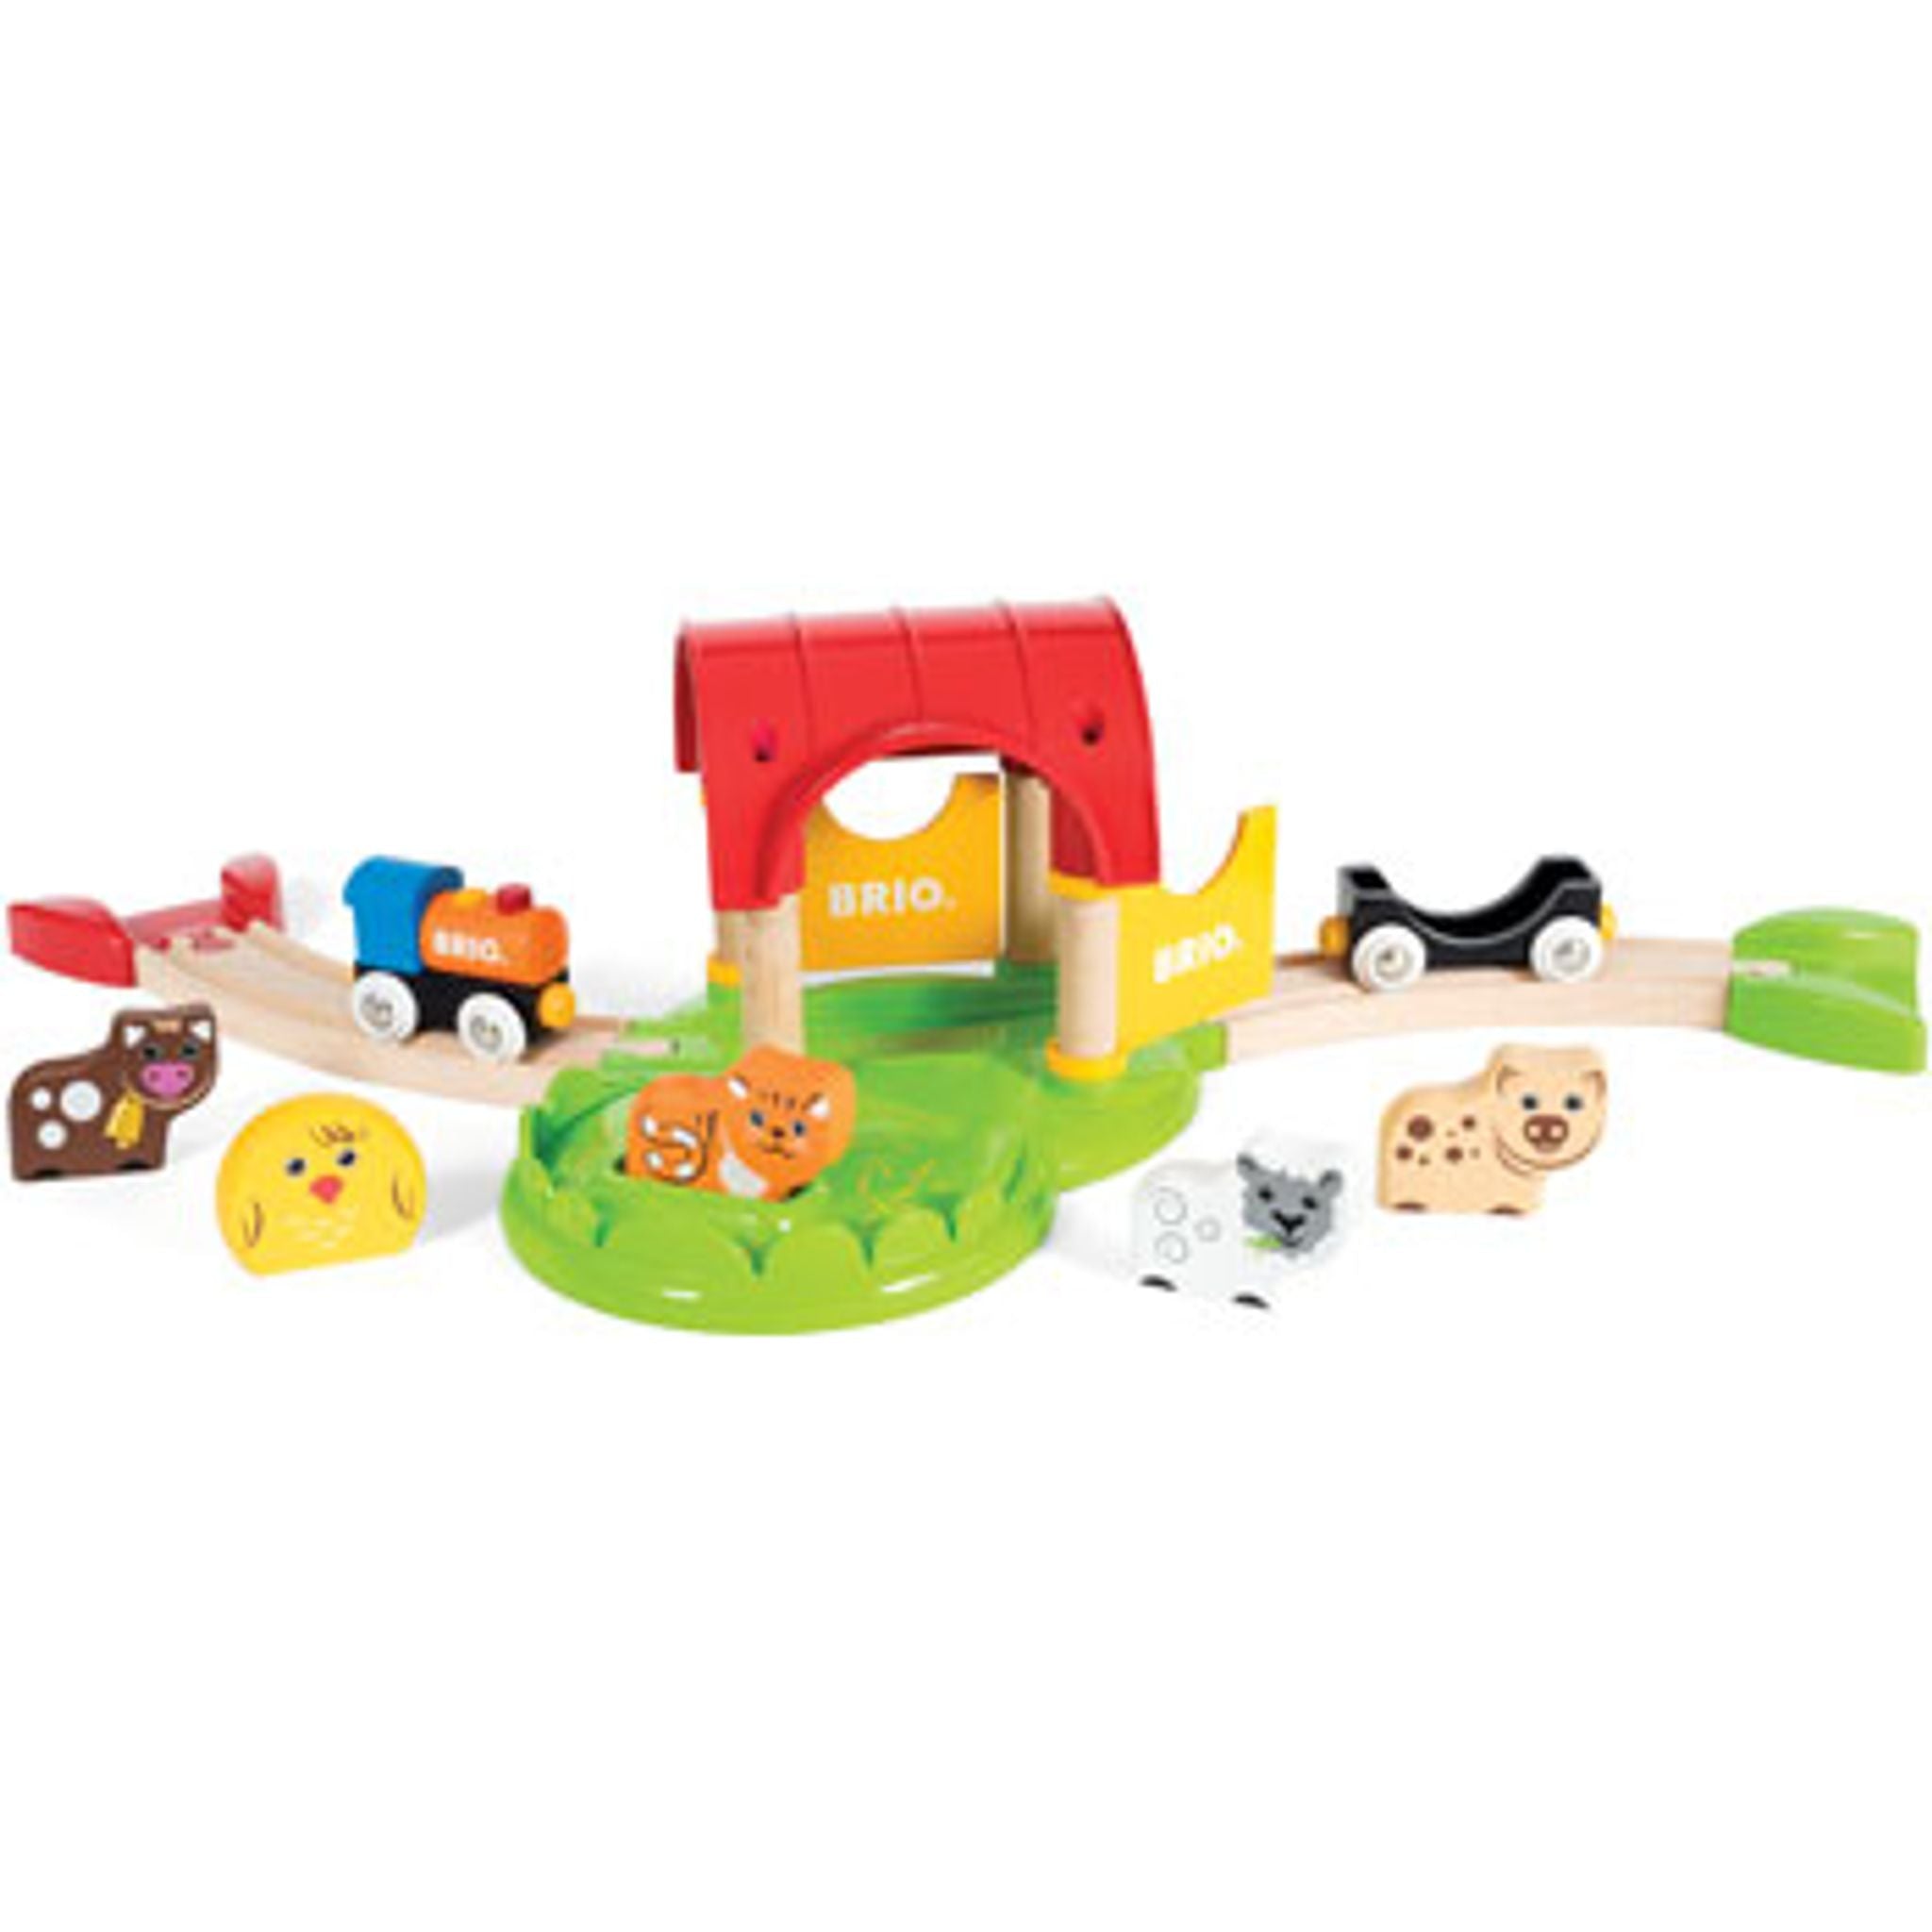 BRIO - My First Farm 12 Pieces - Toybox Tales